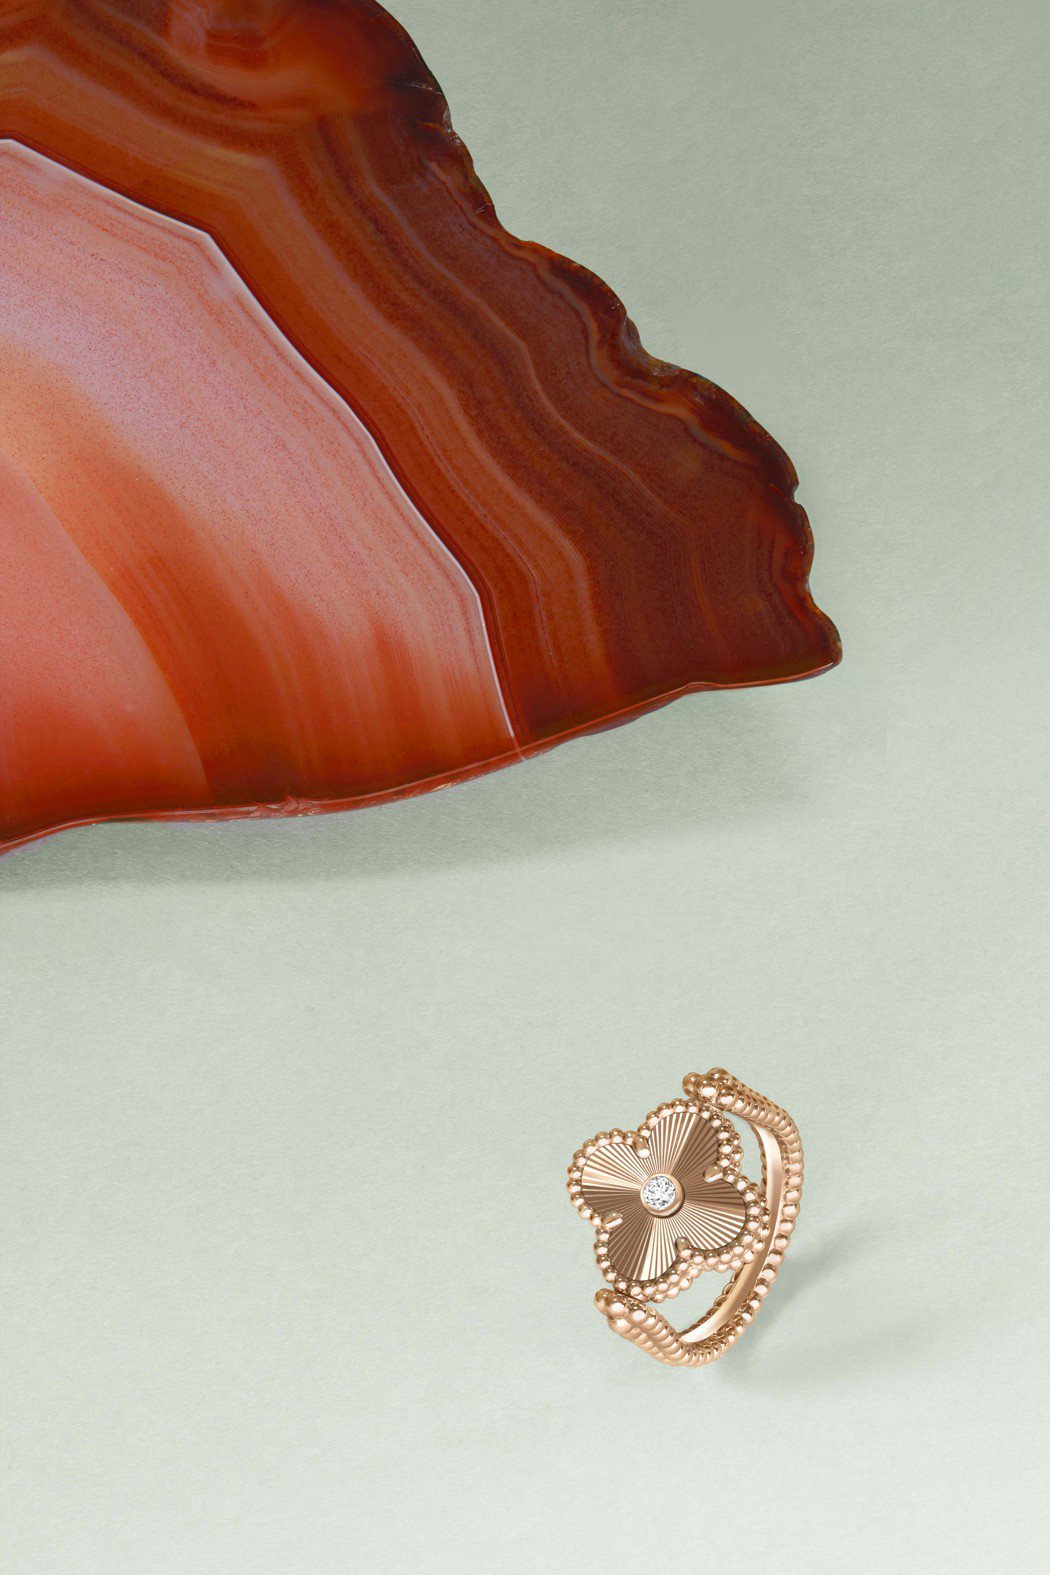 Alhambra玫瑰金雙面戒指，一面為璣鏤雕花玫瑰金搭配鑽石，另一面鑲嵌紅玉髓，...